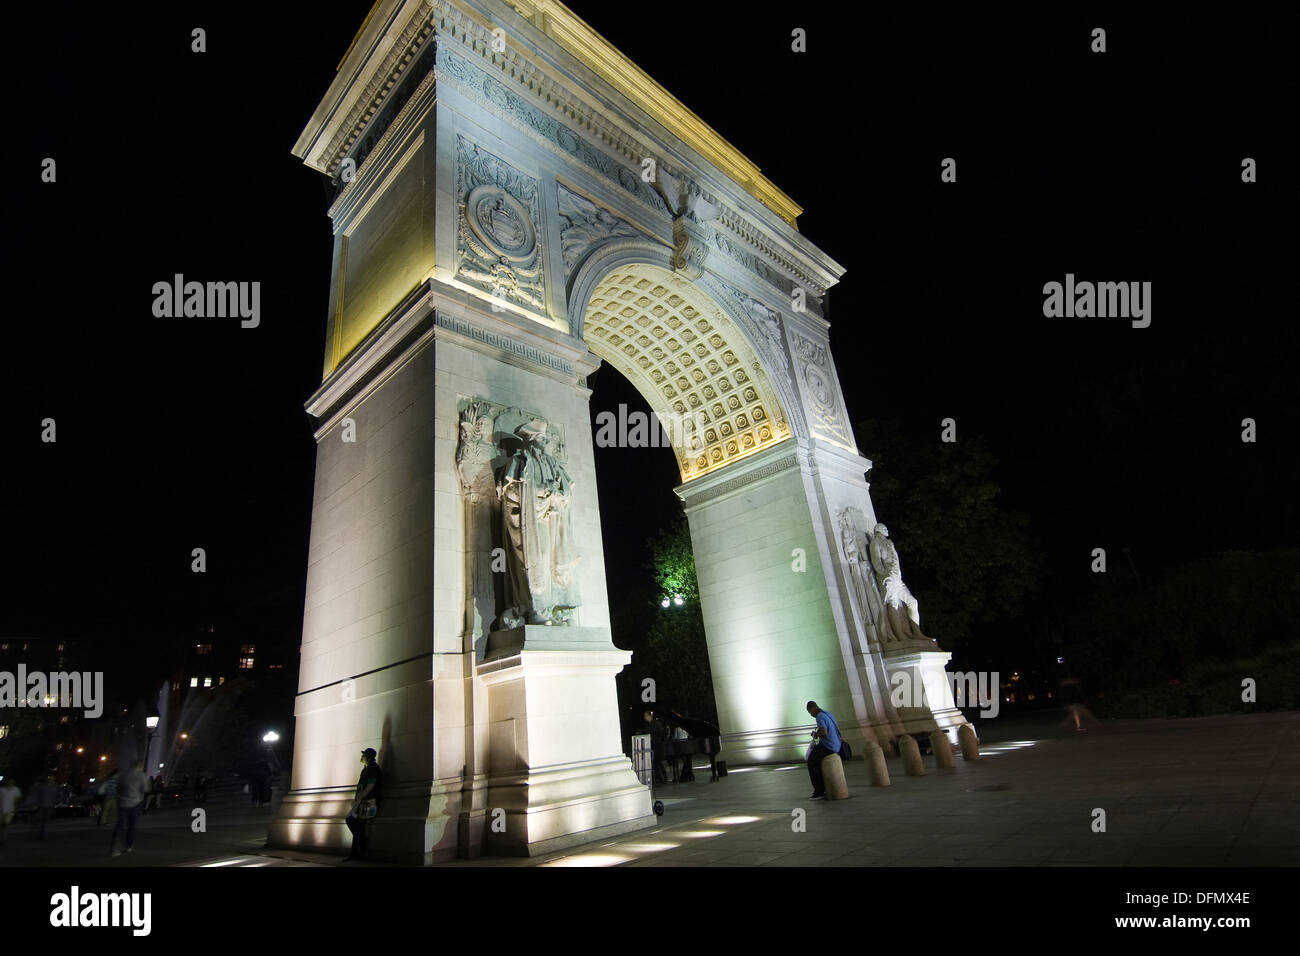 New York City's Washington Arch illuminated at night as seen from 5th Ave looking South into Washington Sq Park Stock Photo